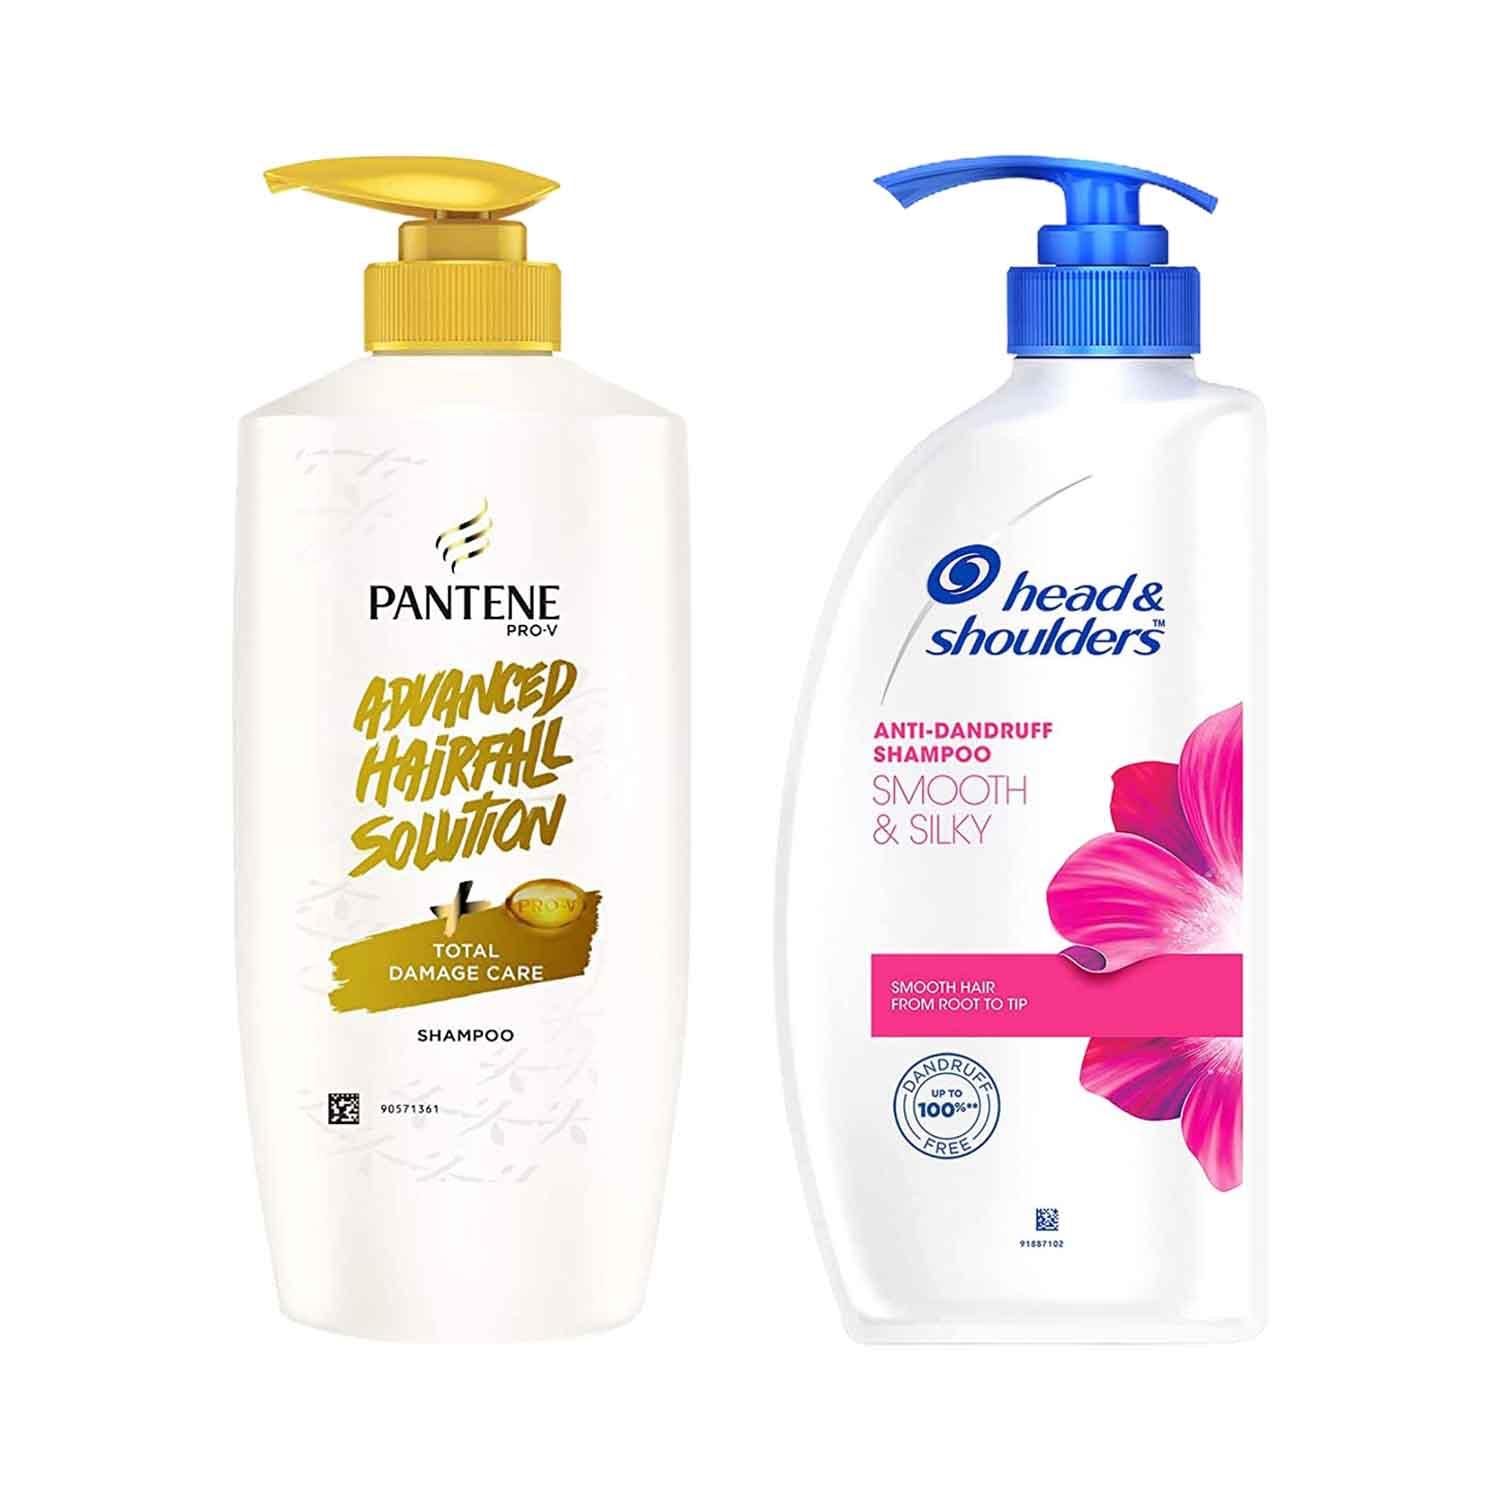 Pantene | Pantene Advanced Hairfall Solution Shampoo and Head & Shoulders Smooth and Silky Shampoo Combo